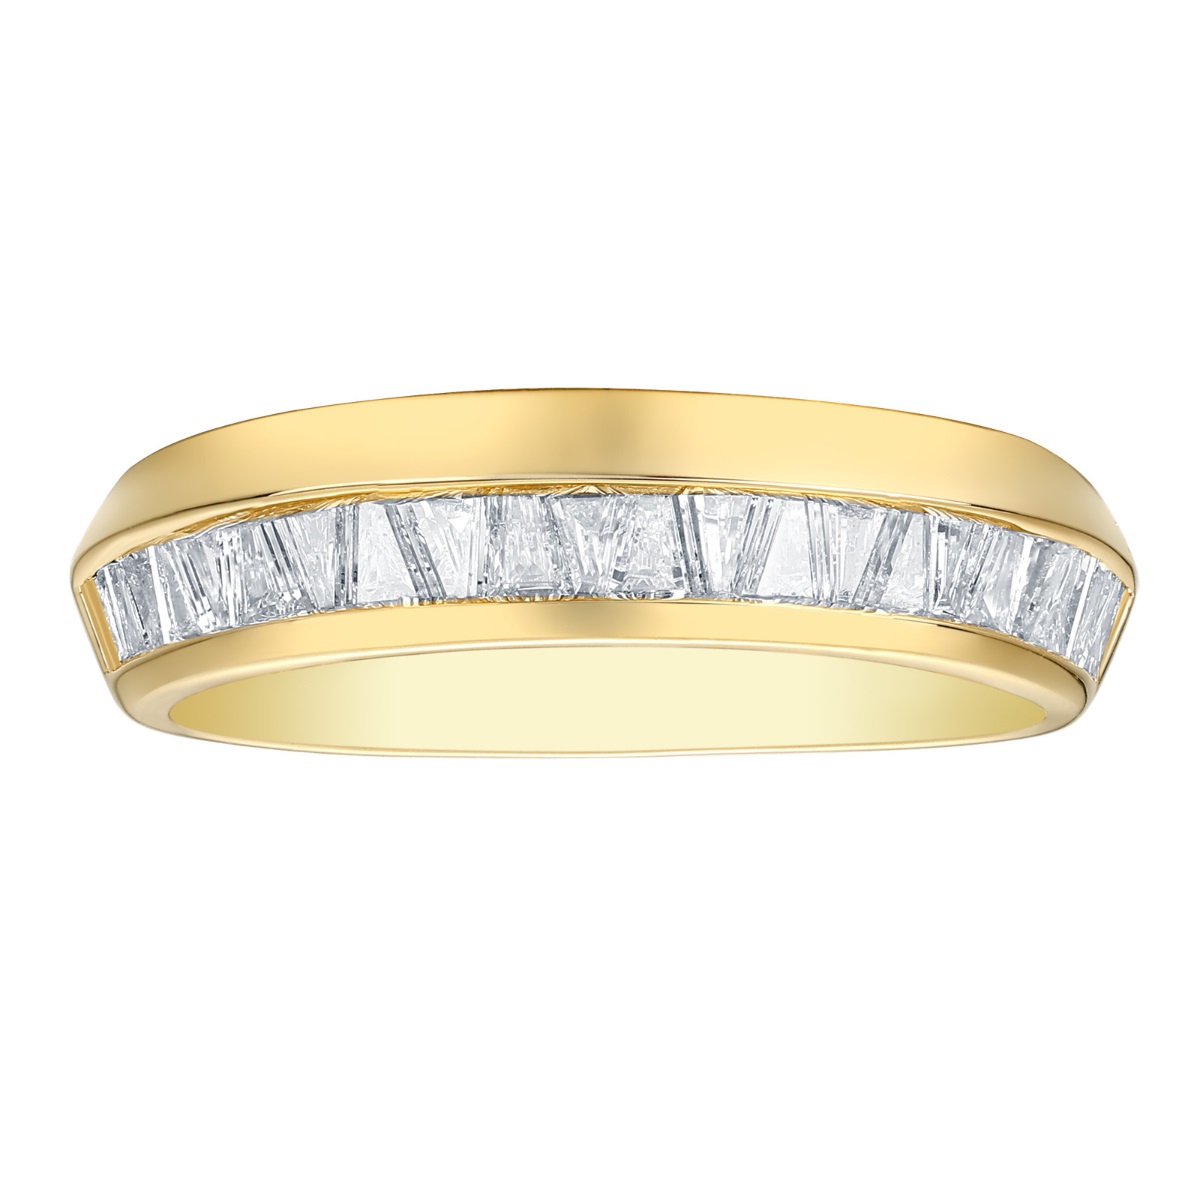 R36801WHT – 18K Yellow Gold Diamond Ring, 0.51 TCW